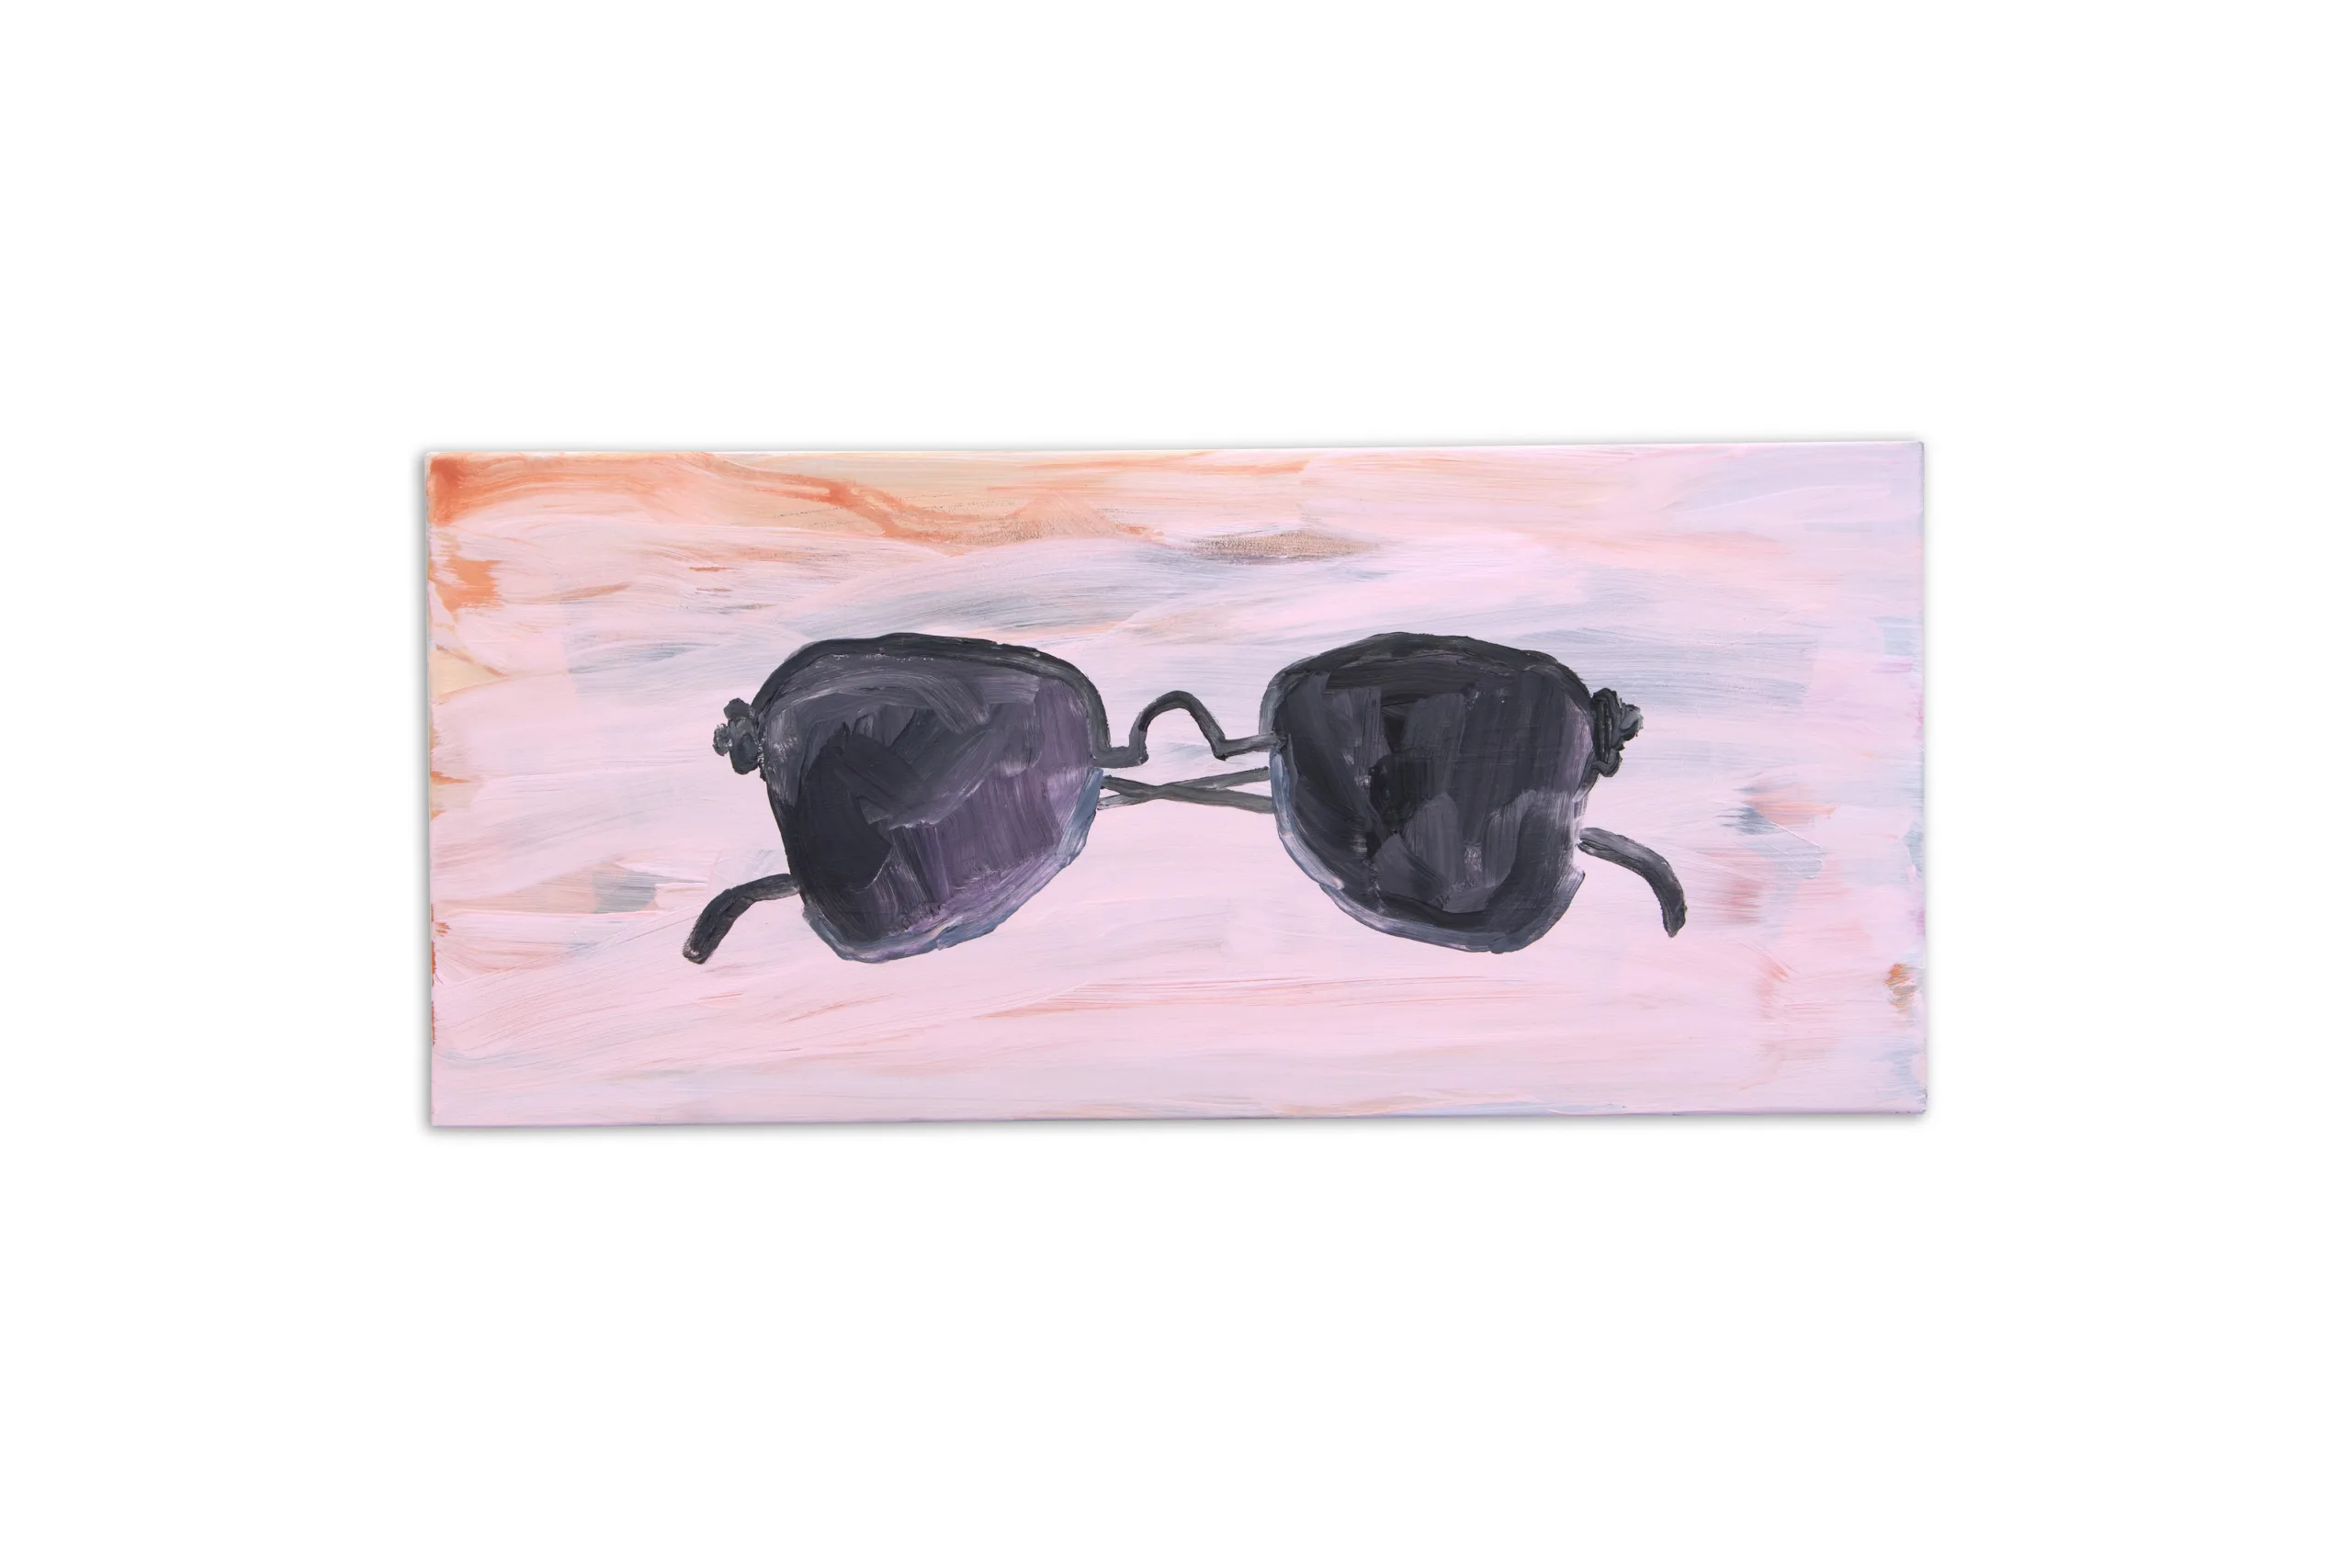 Stefanie Winter painting of sunglasses series